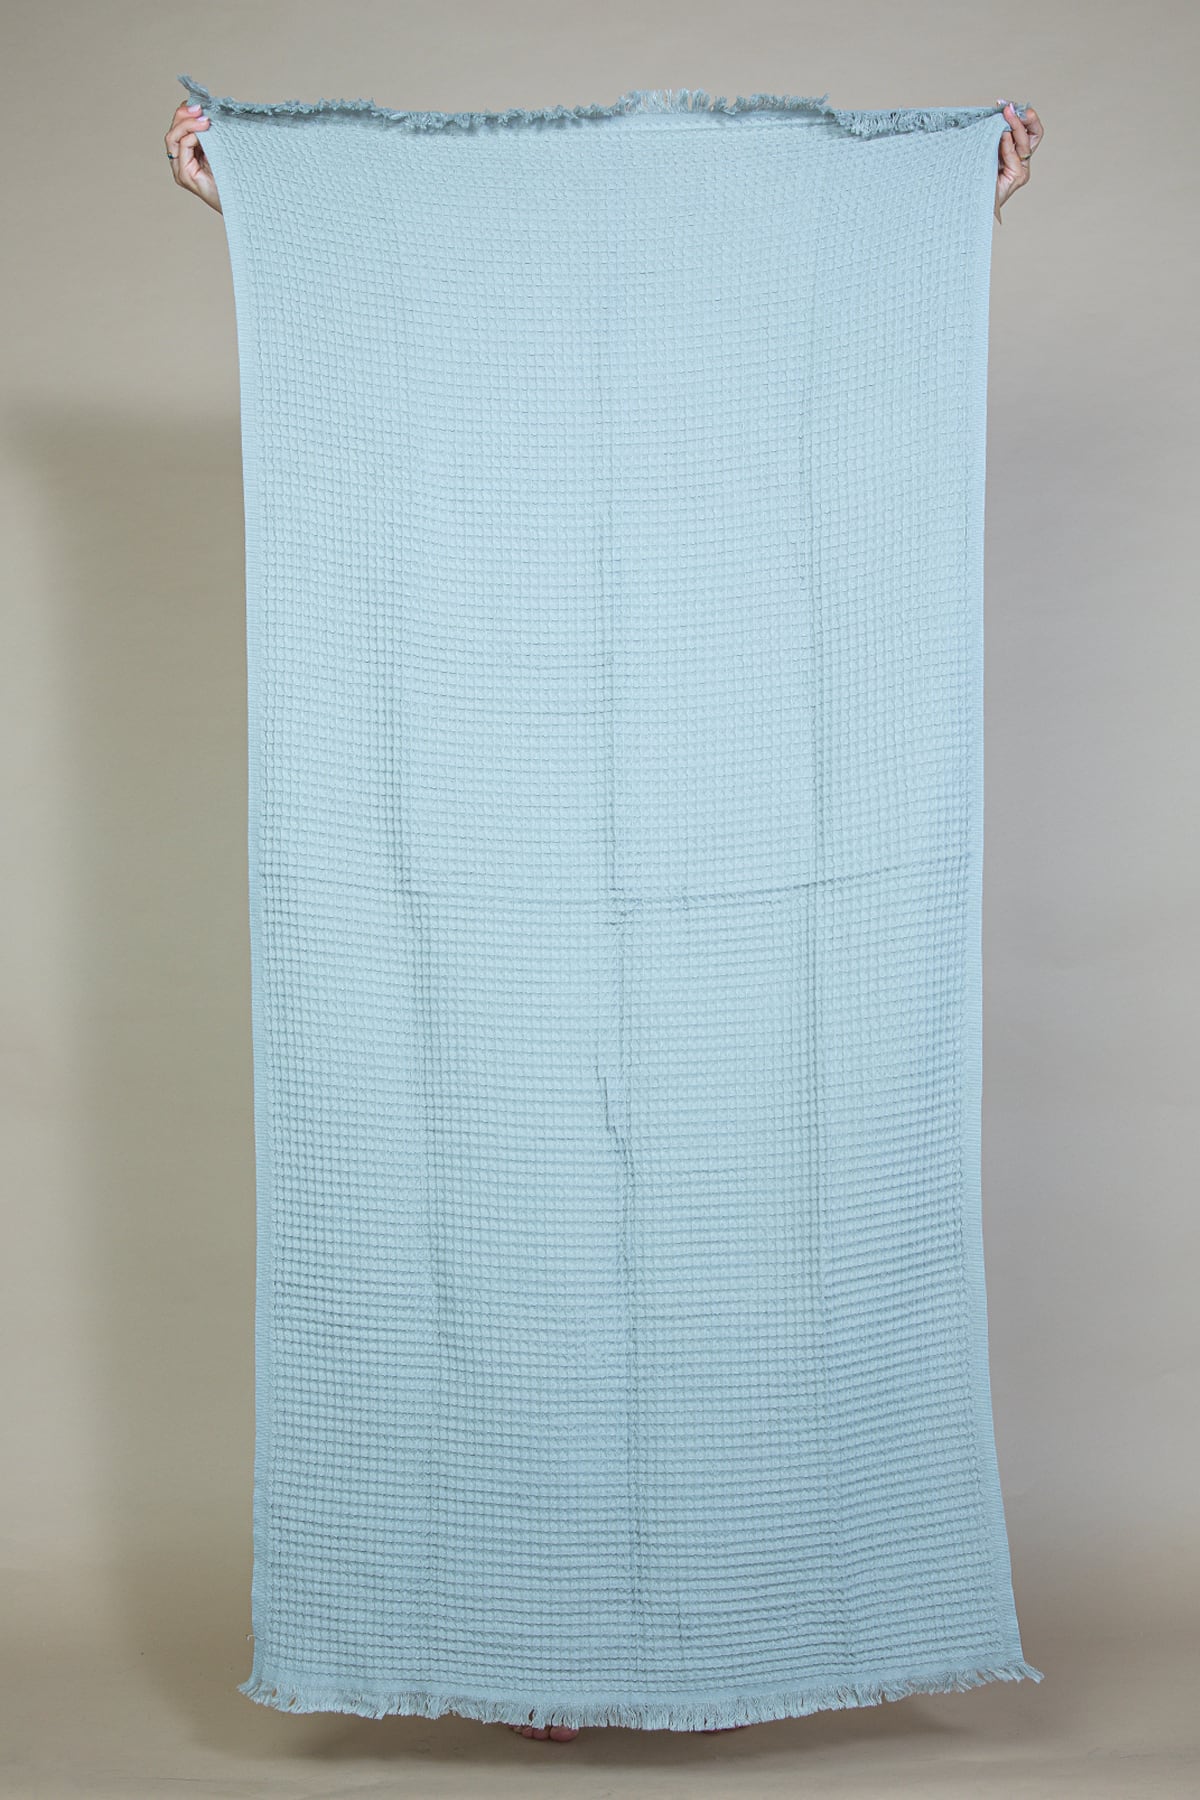 MØDA Waffle Turkish Towel (Olive Gray) - Turkish Towel